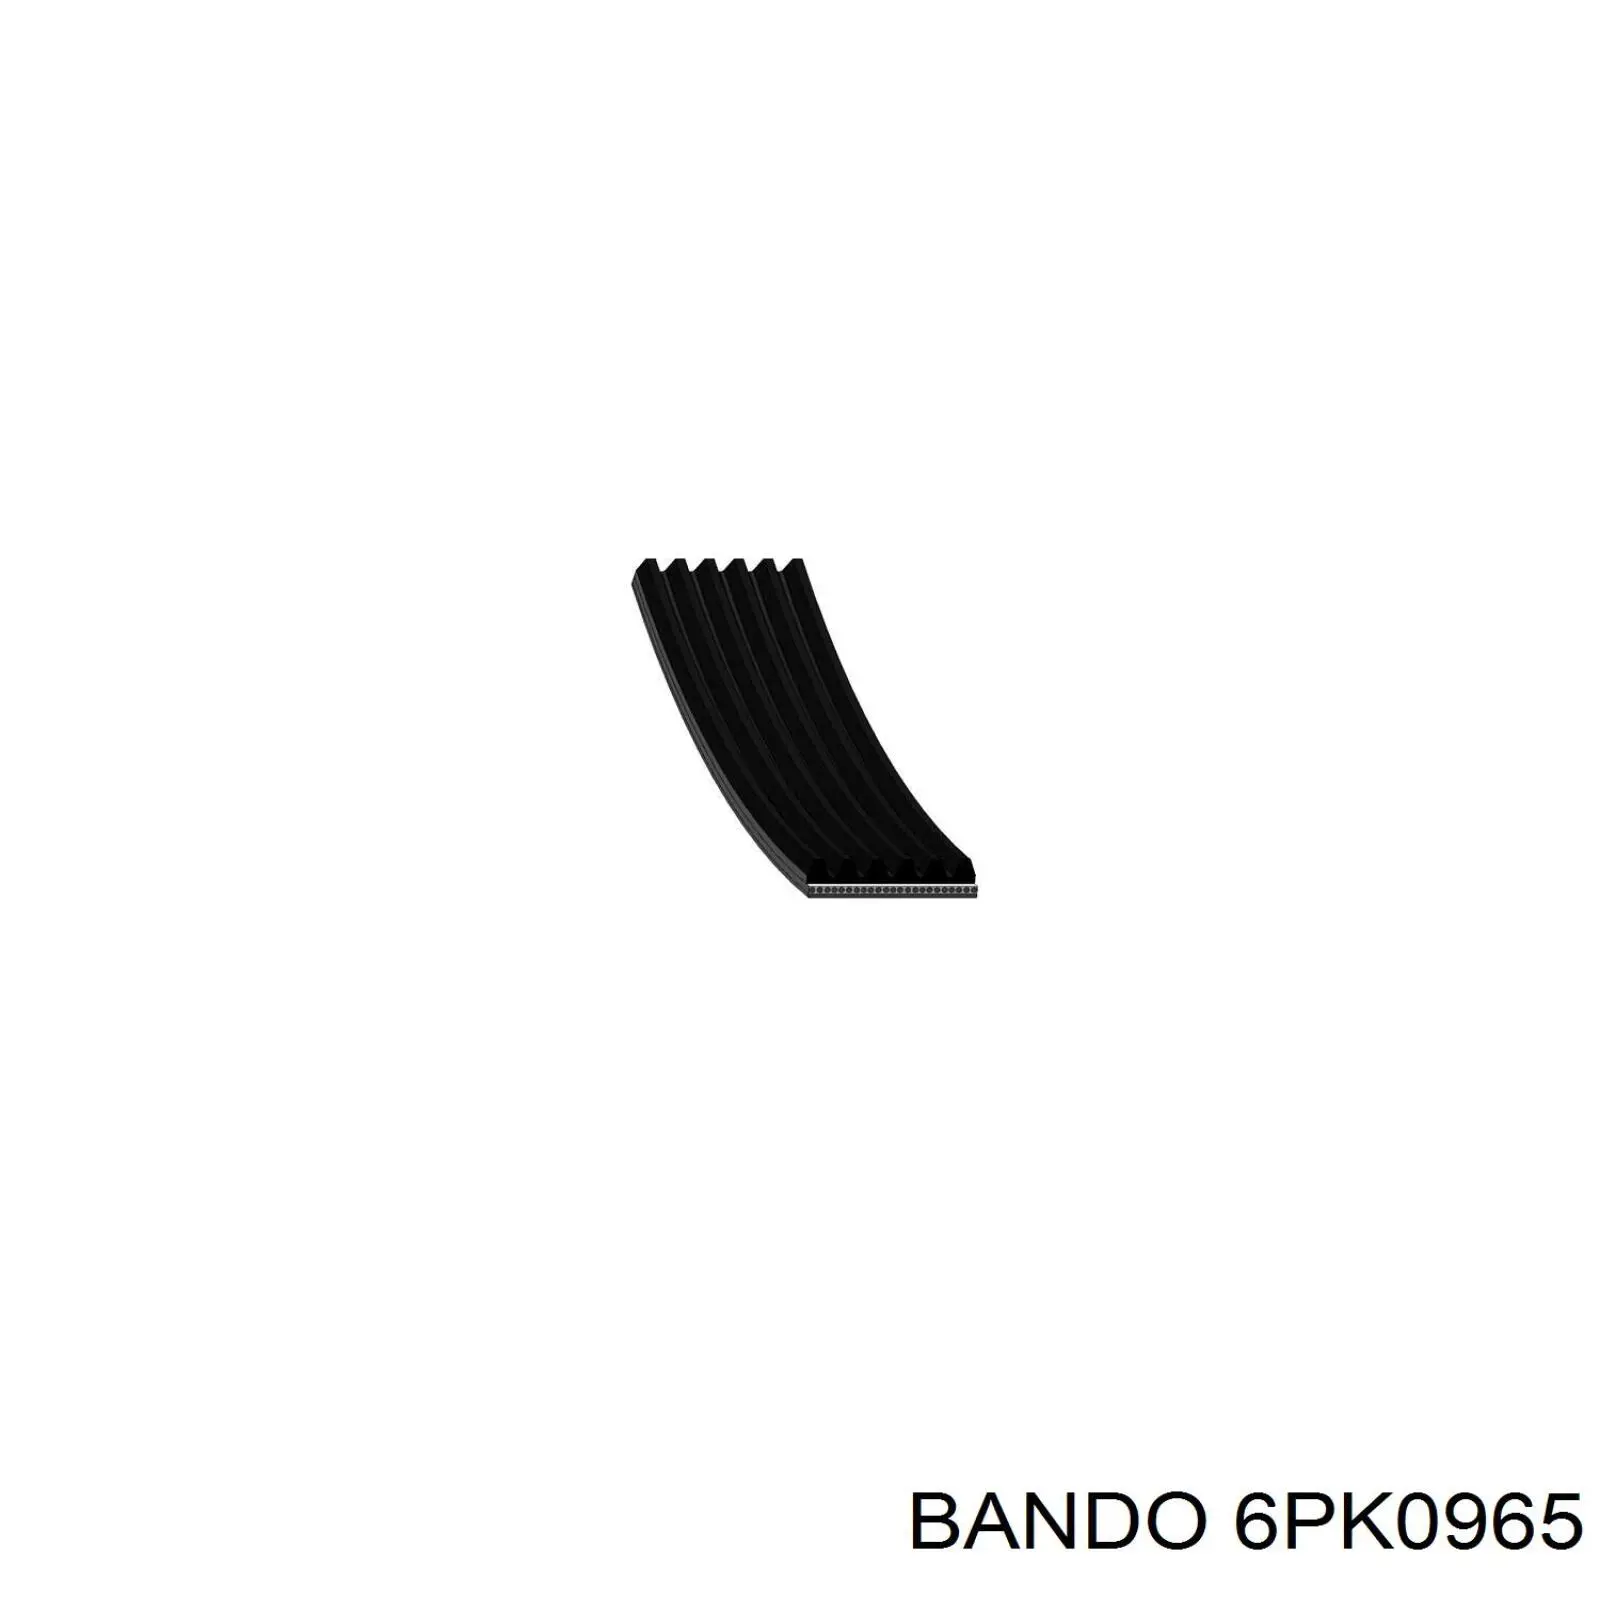 6PK0965 Bando correa trapezoidal